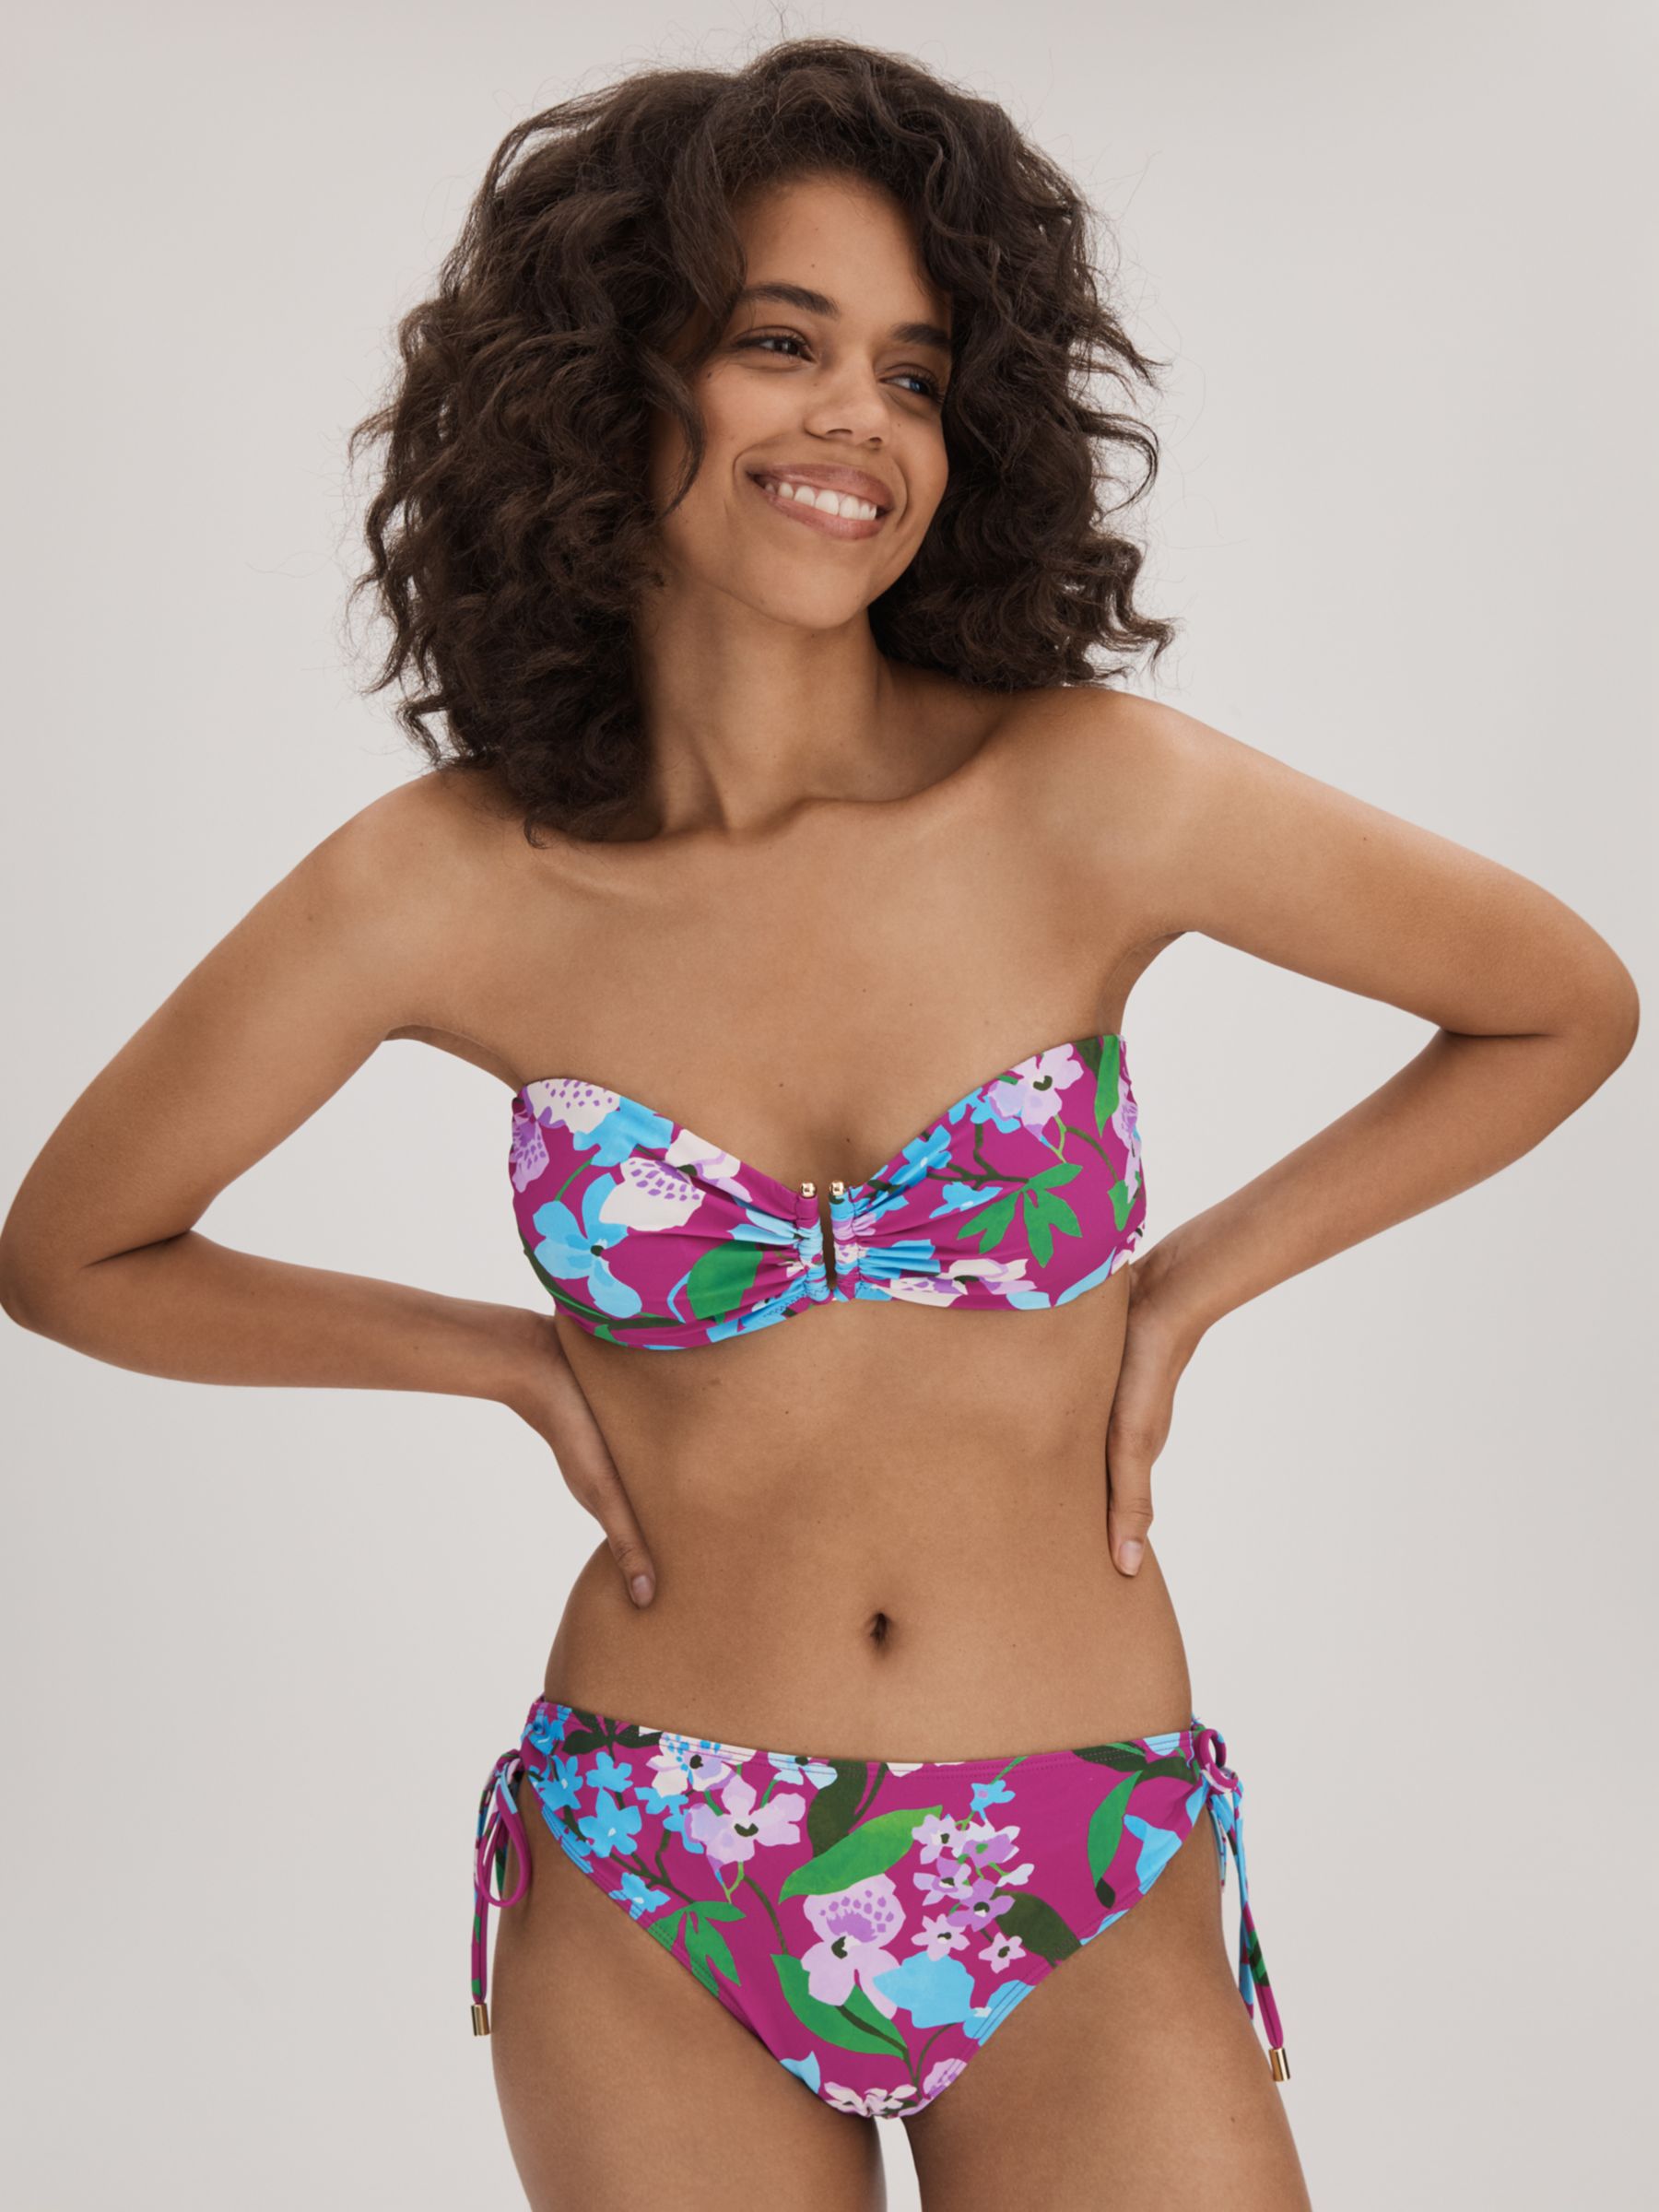 FLORERE Floral Print Bandeau Bikini Top, Multi, 8